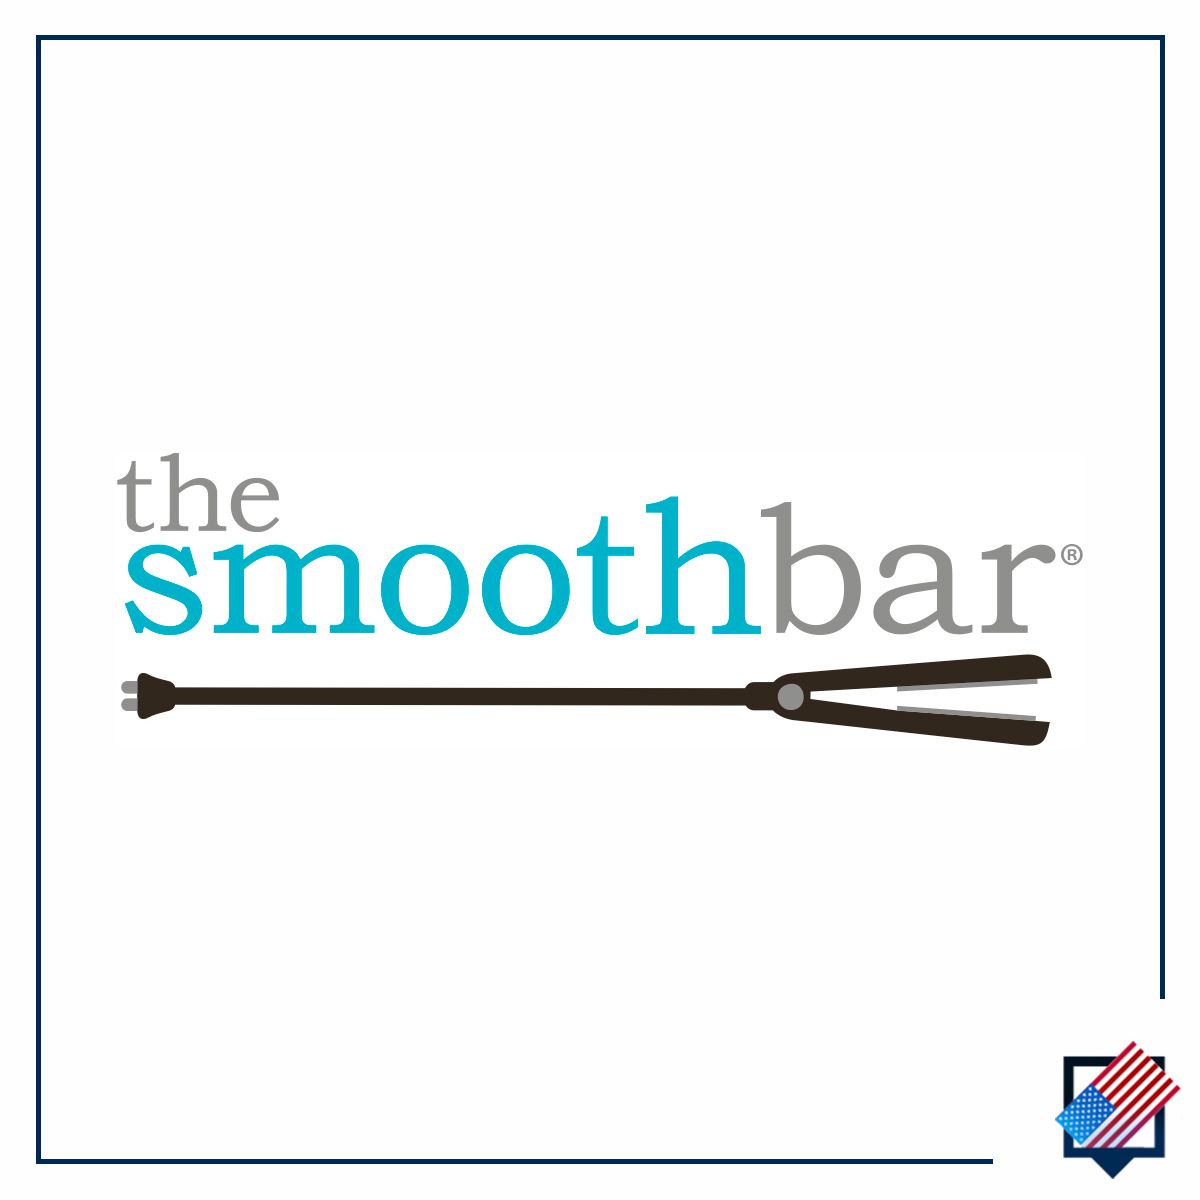 The Smoothbar